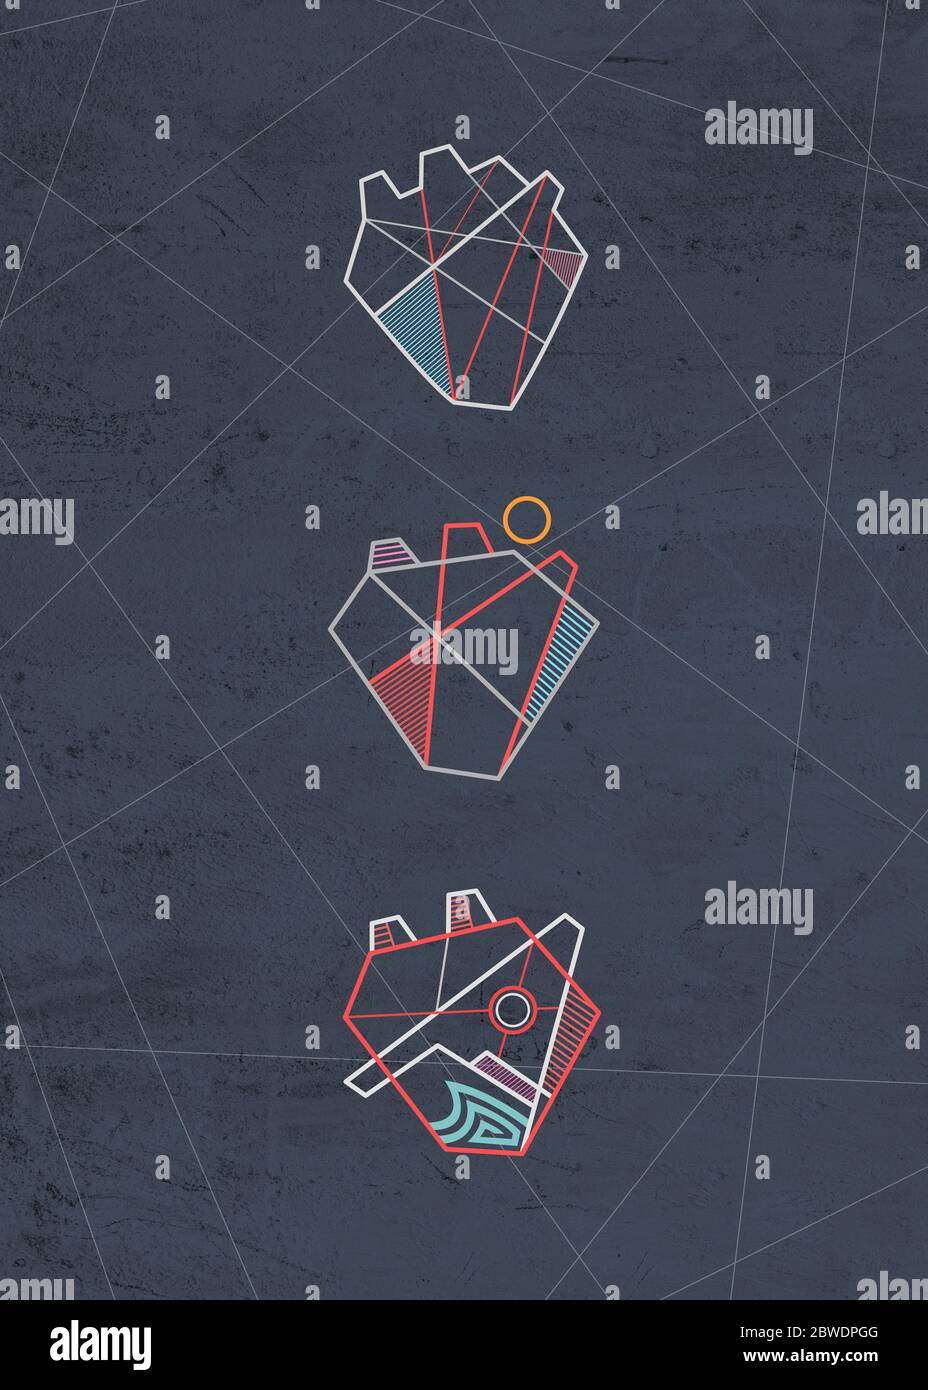 Digital illustrations of some geometric minimal hearts symbols Stock Photo